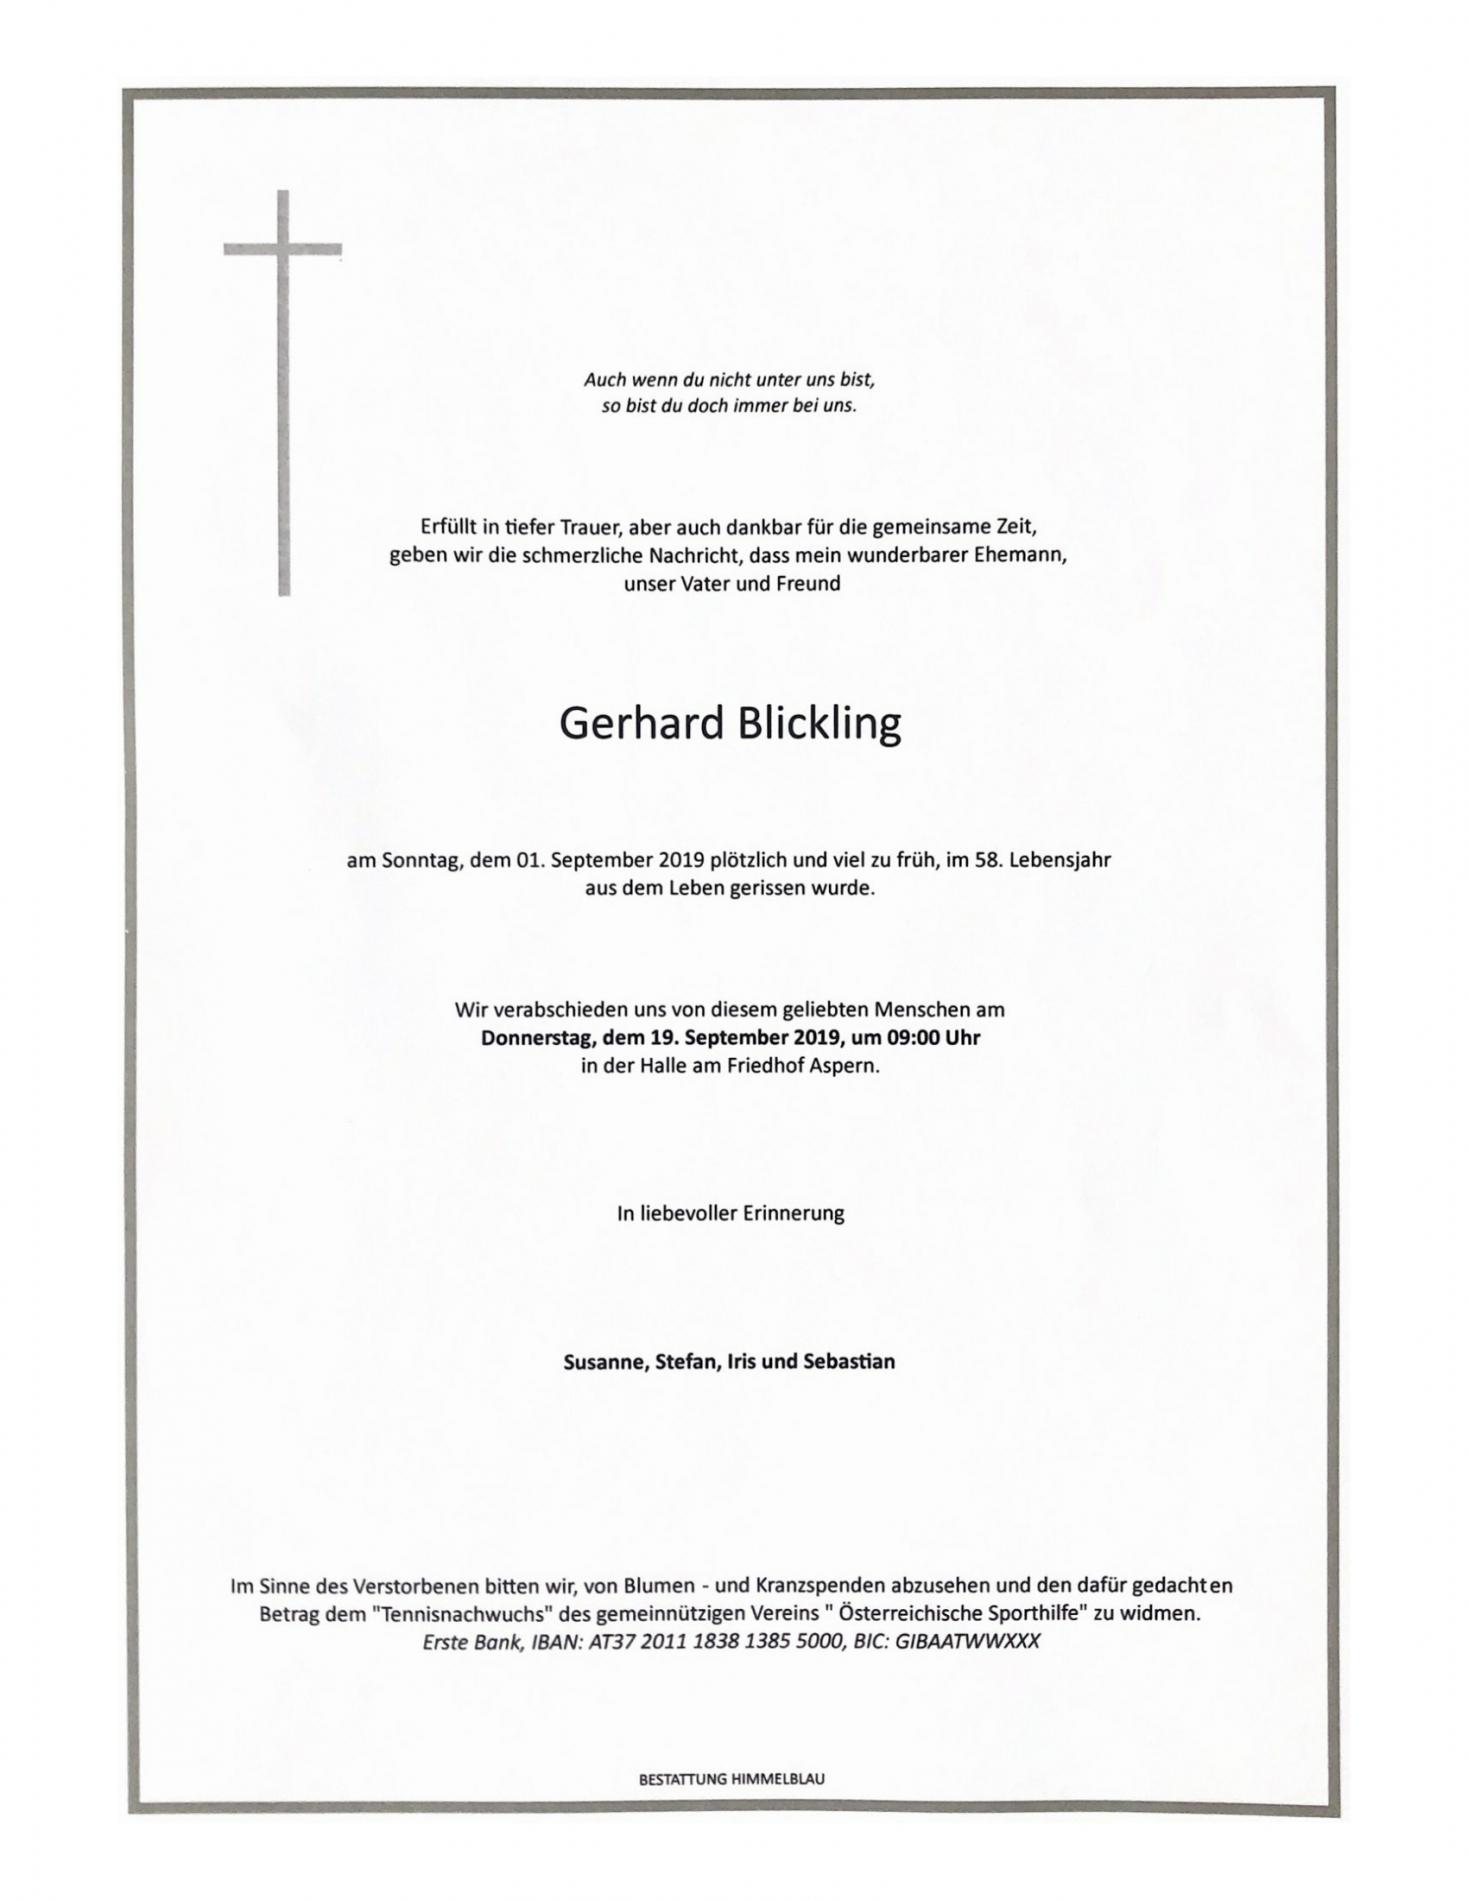 parte gerhard blickling page 1 20190909 1519522182